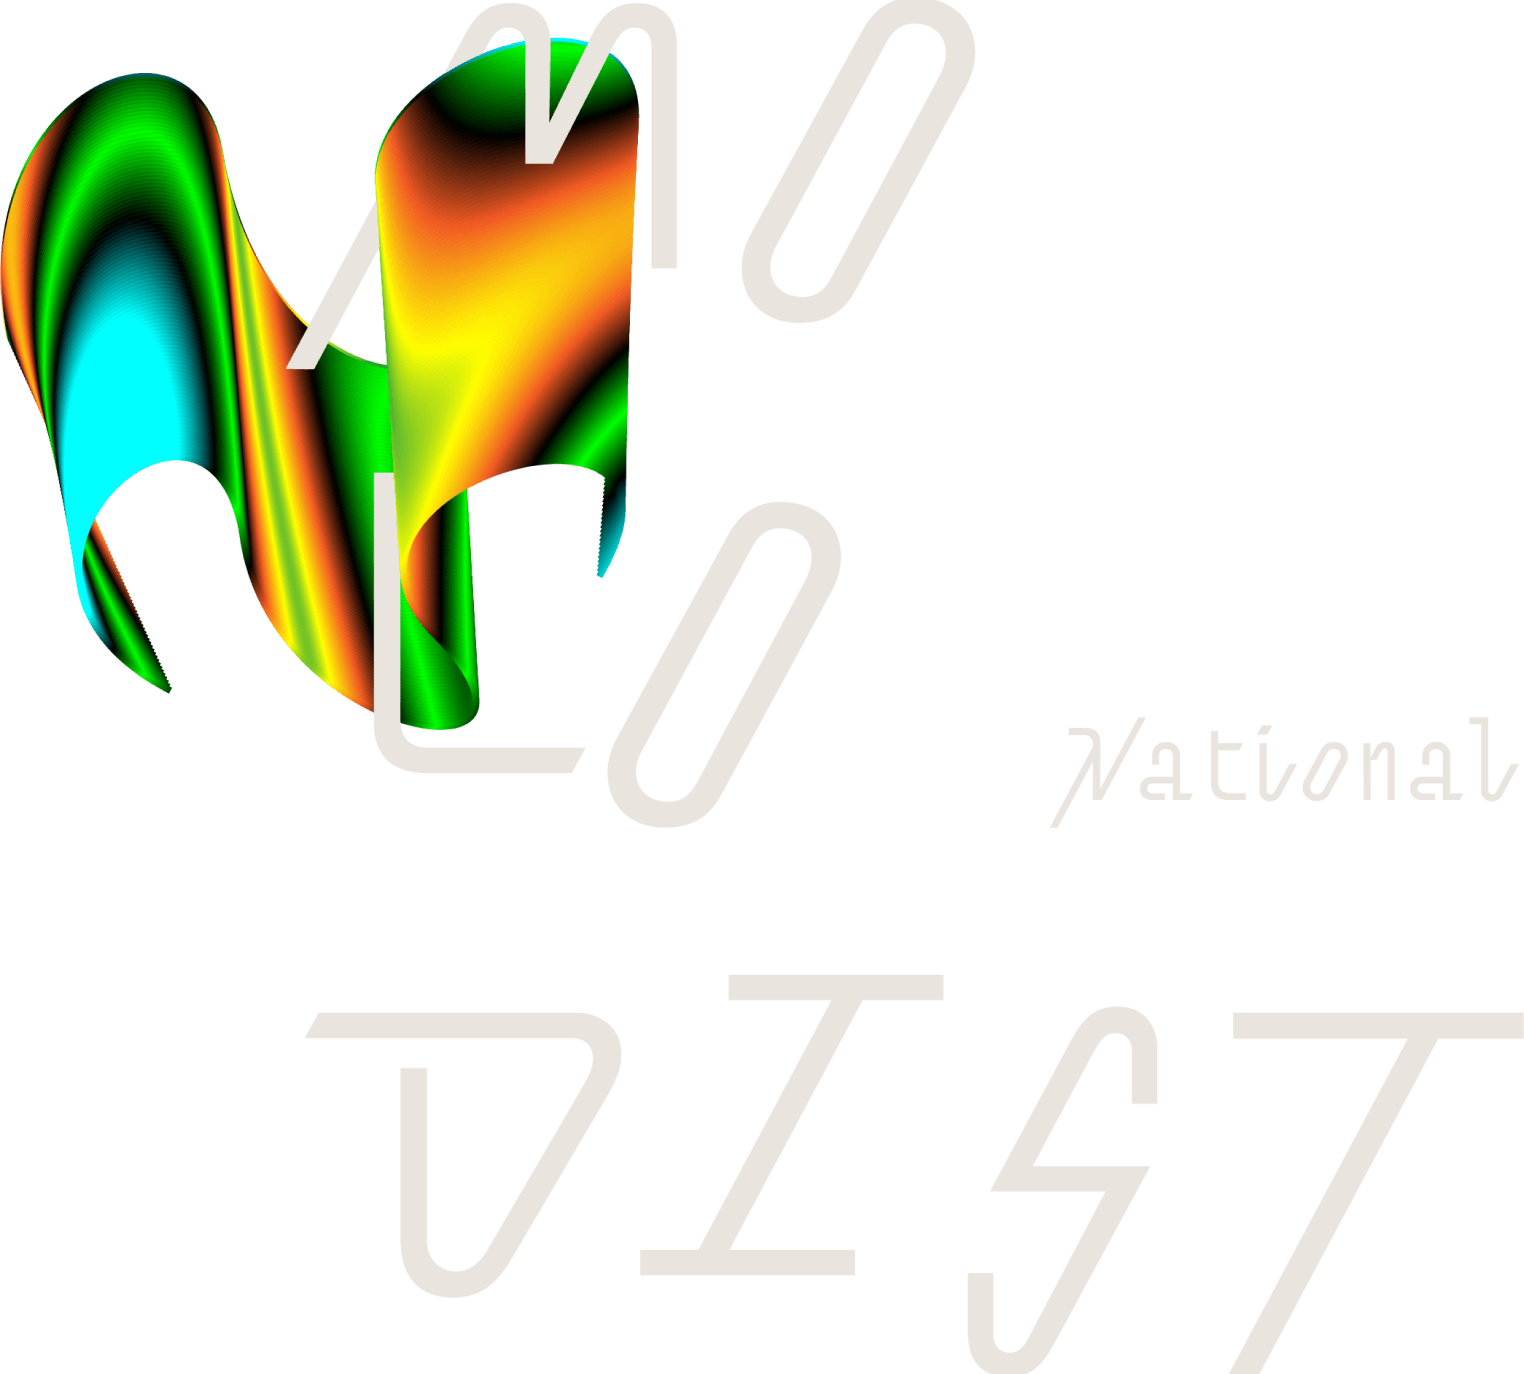 molodist logo national